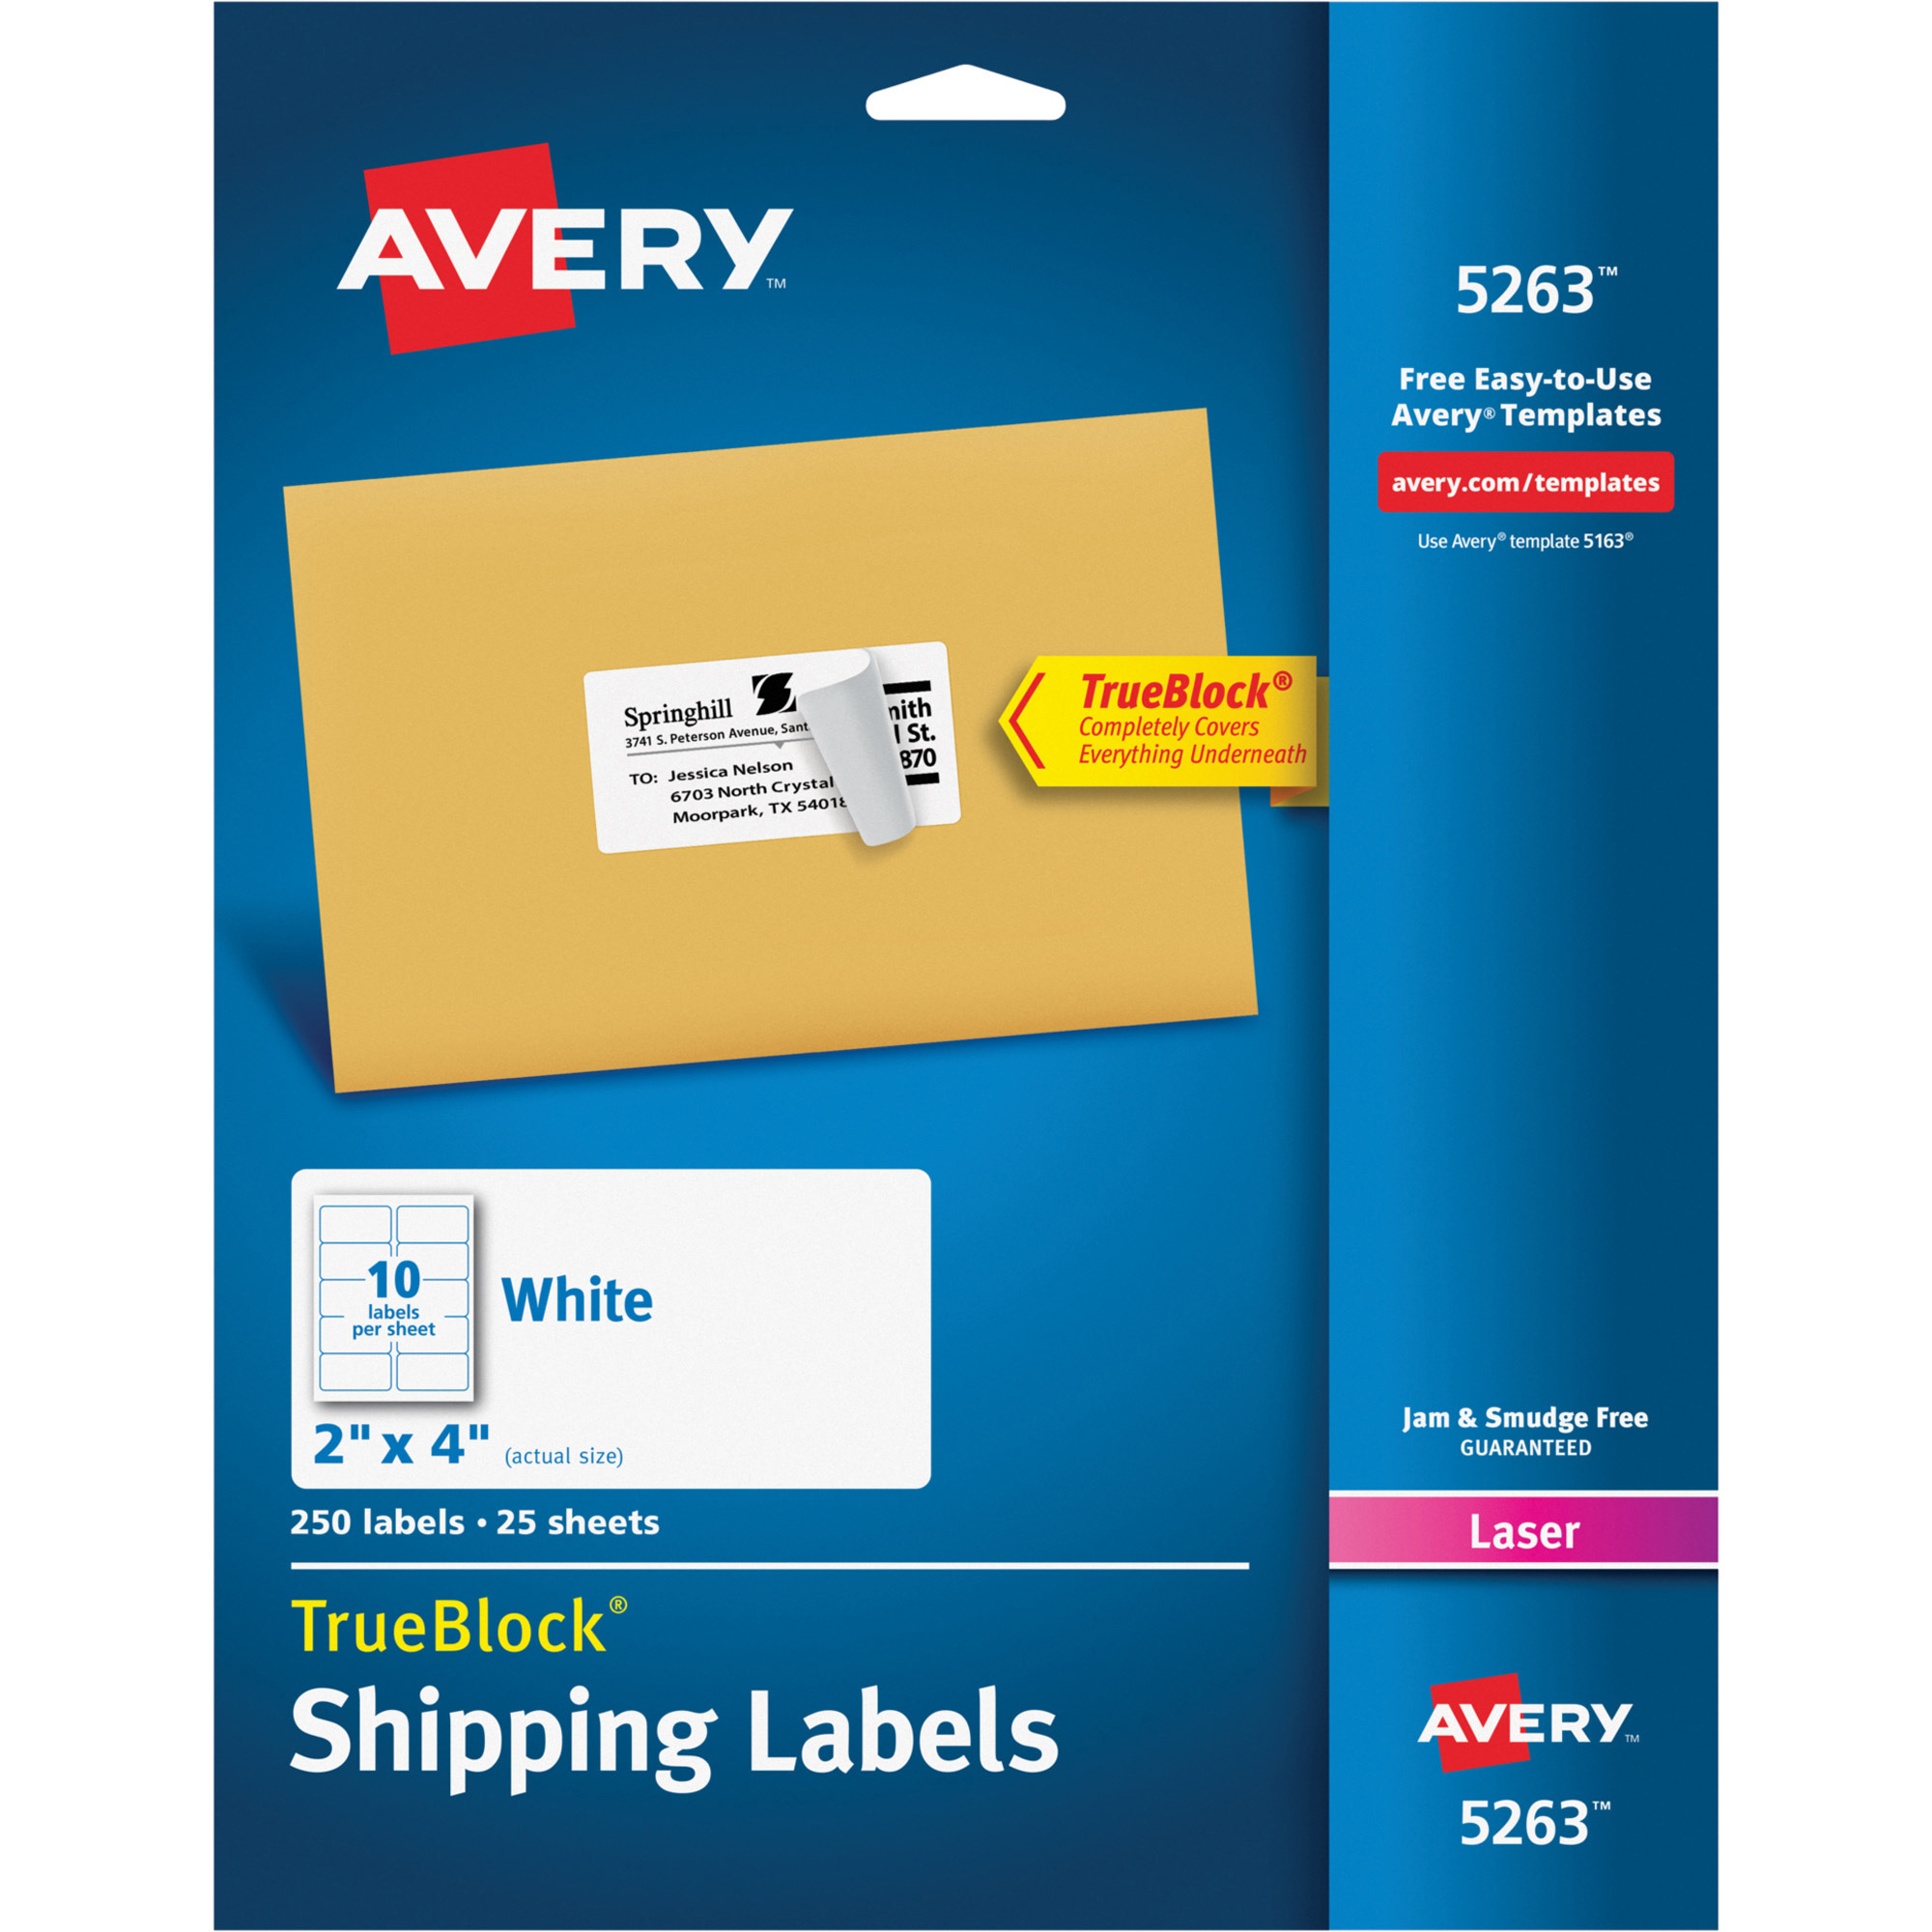 laser inkjet labels avery template 8167